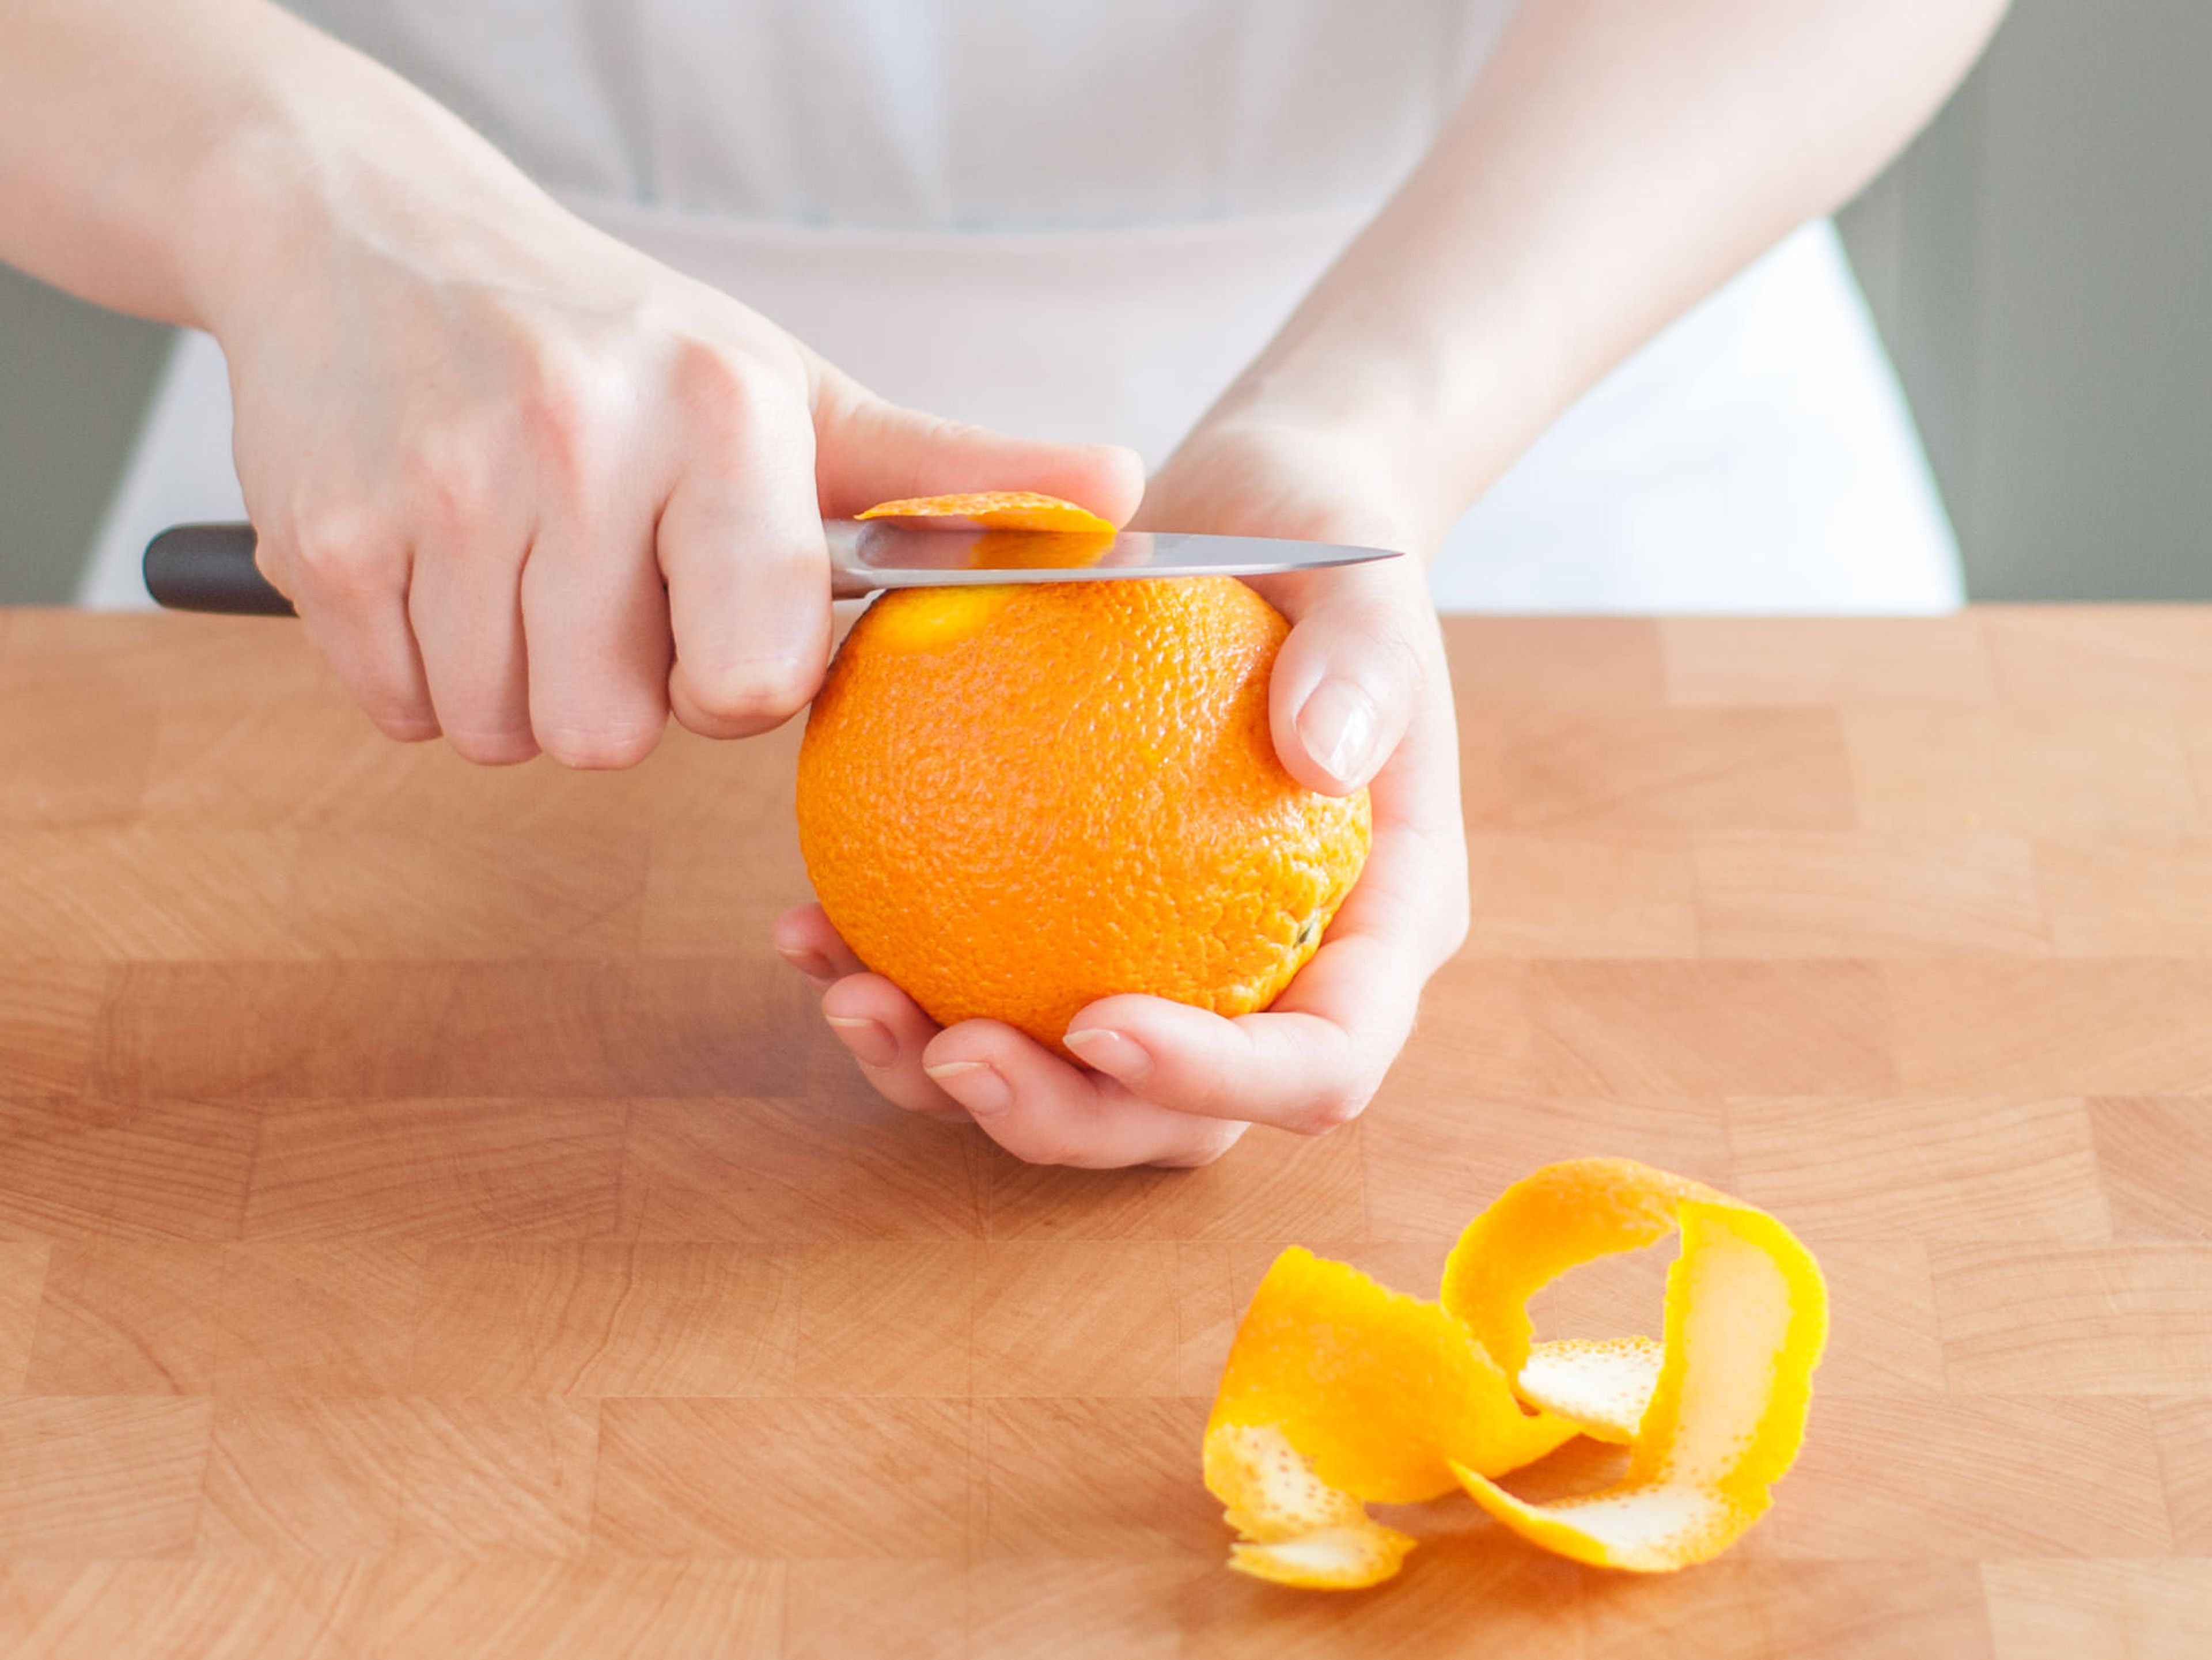 Cut one orange peel per glass.